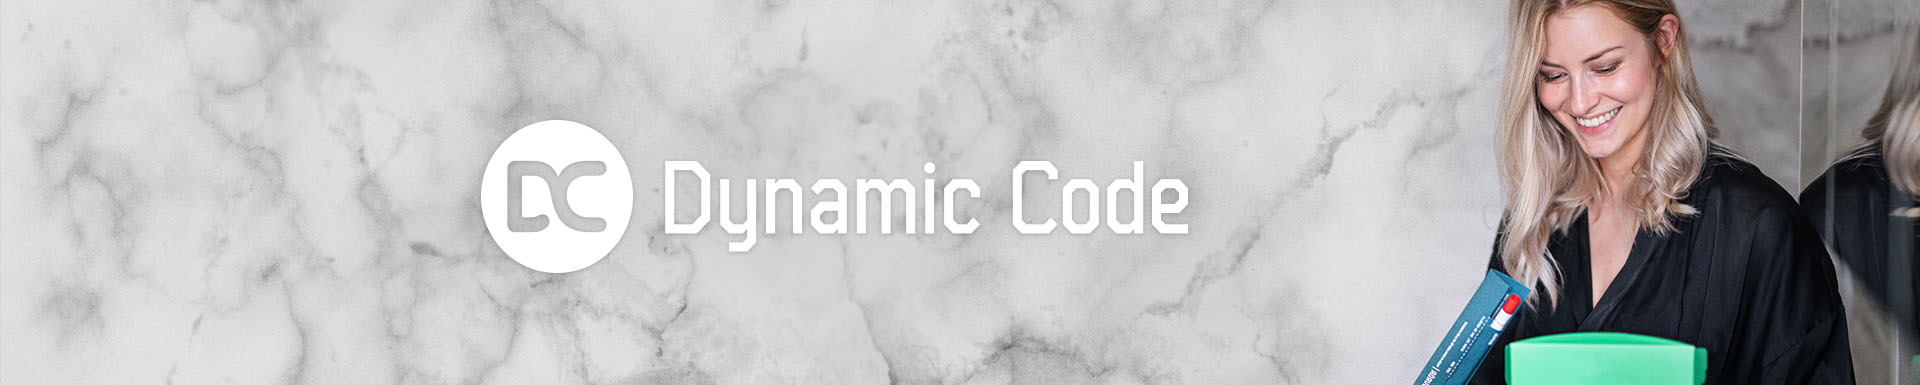 Dynamic Code tilbyr smarte testløsninger til hjemmetesting